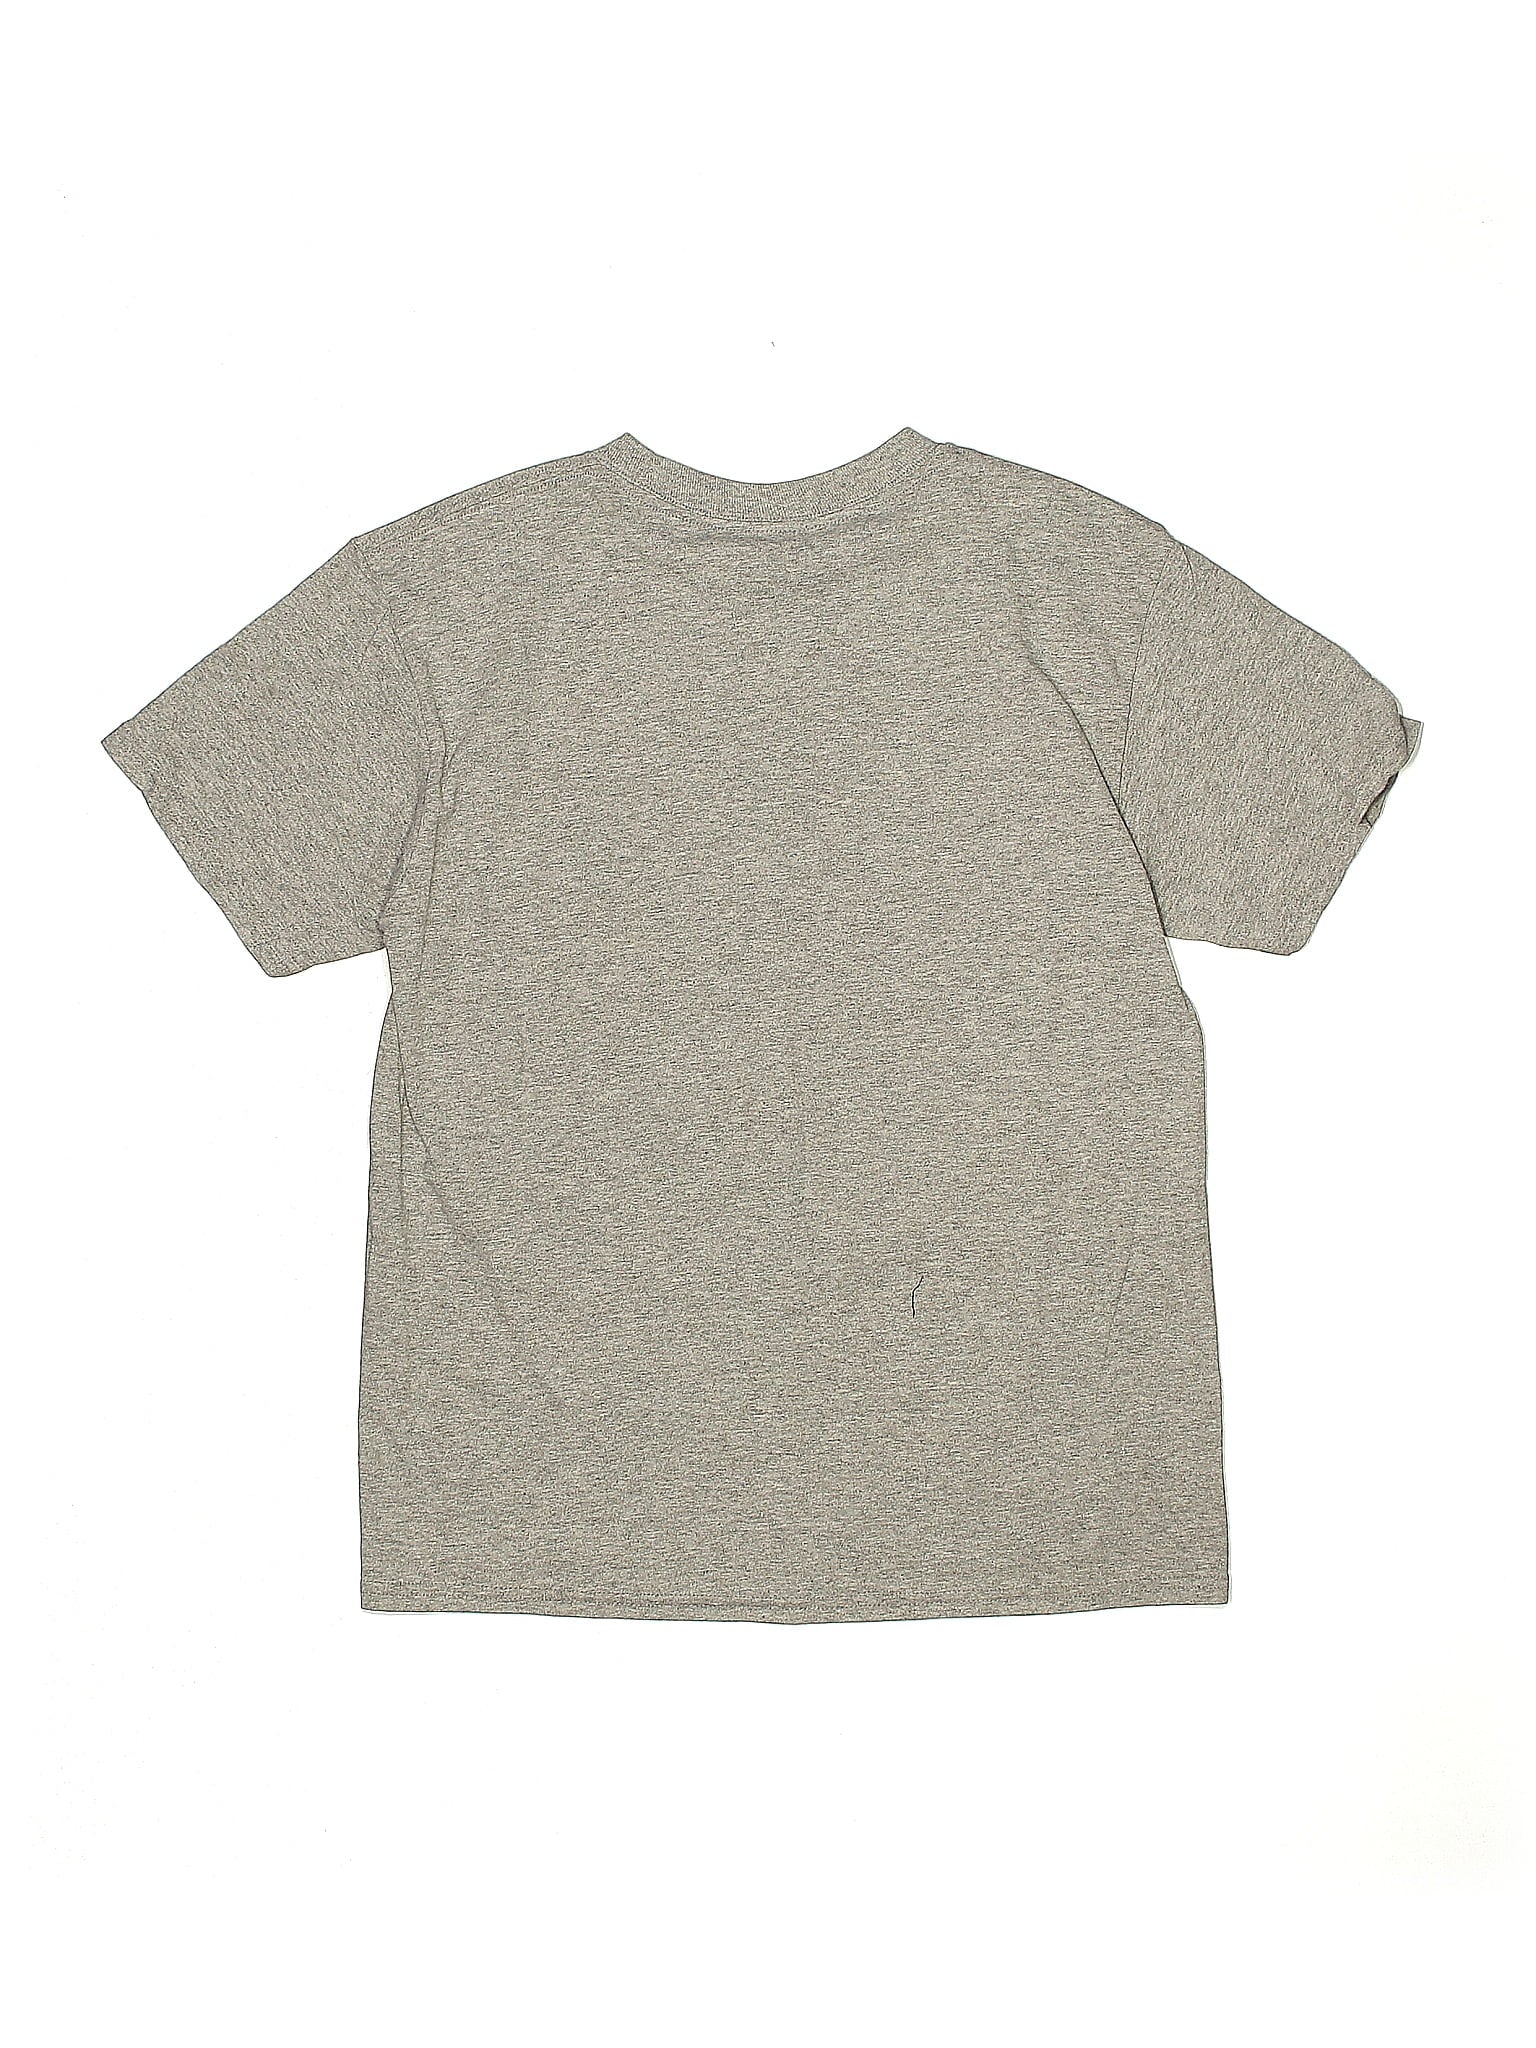 Short Sleeve T Shirt size - 10 - 12